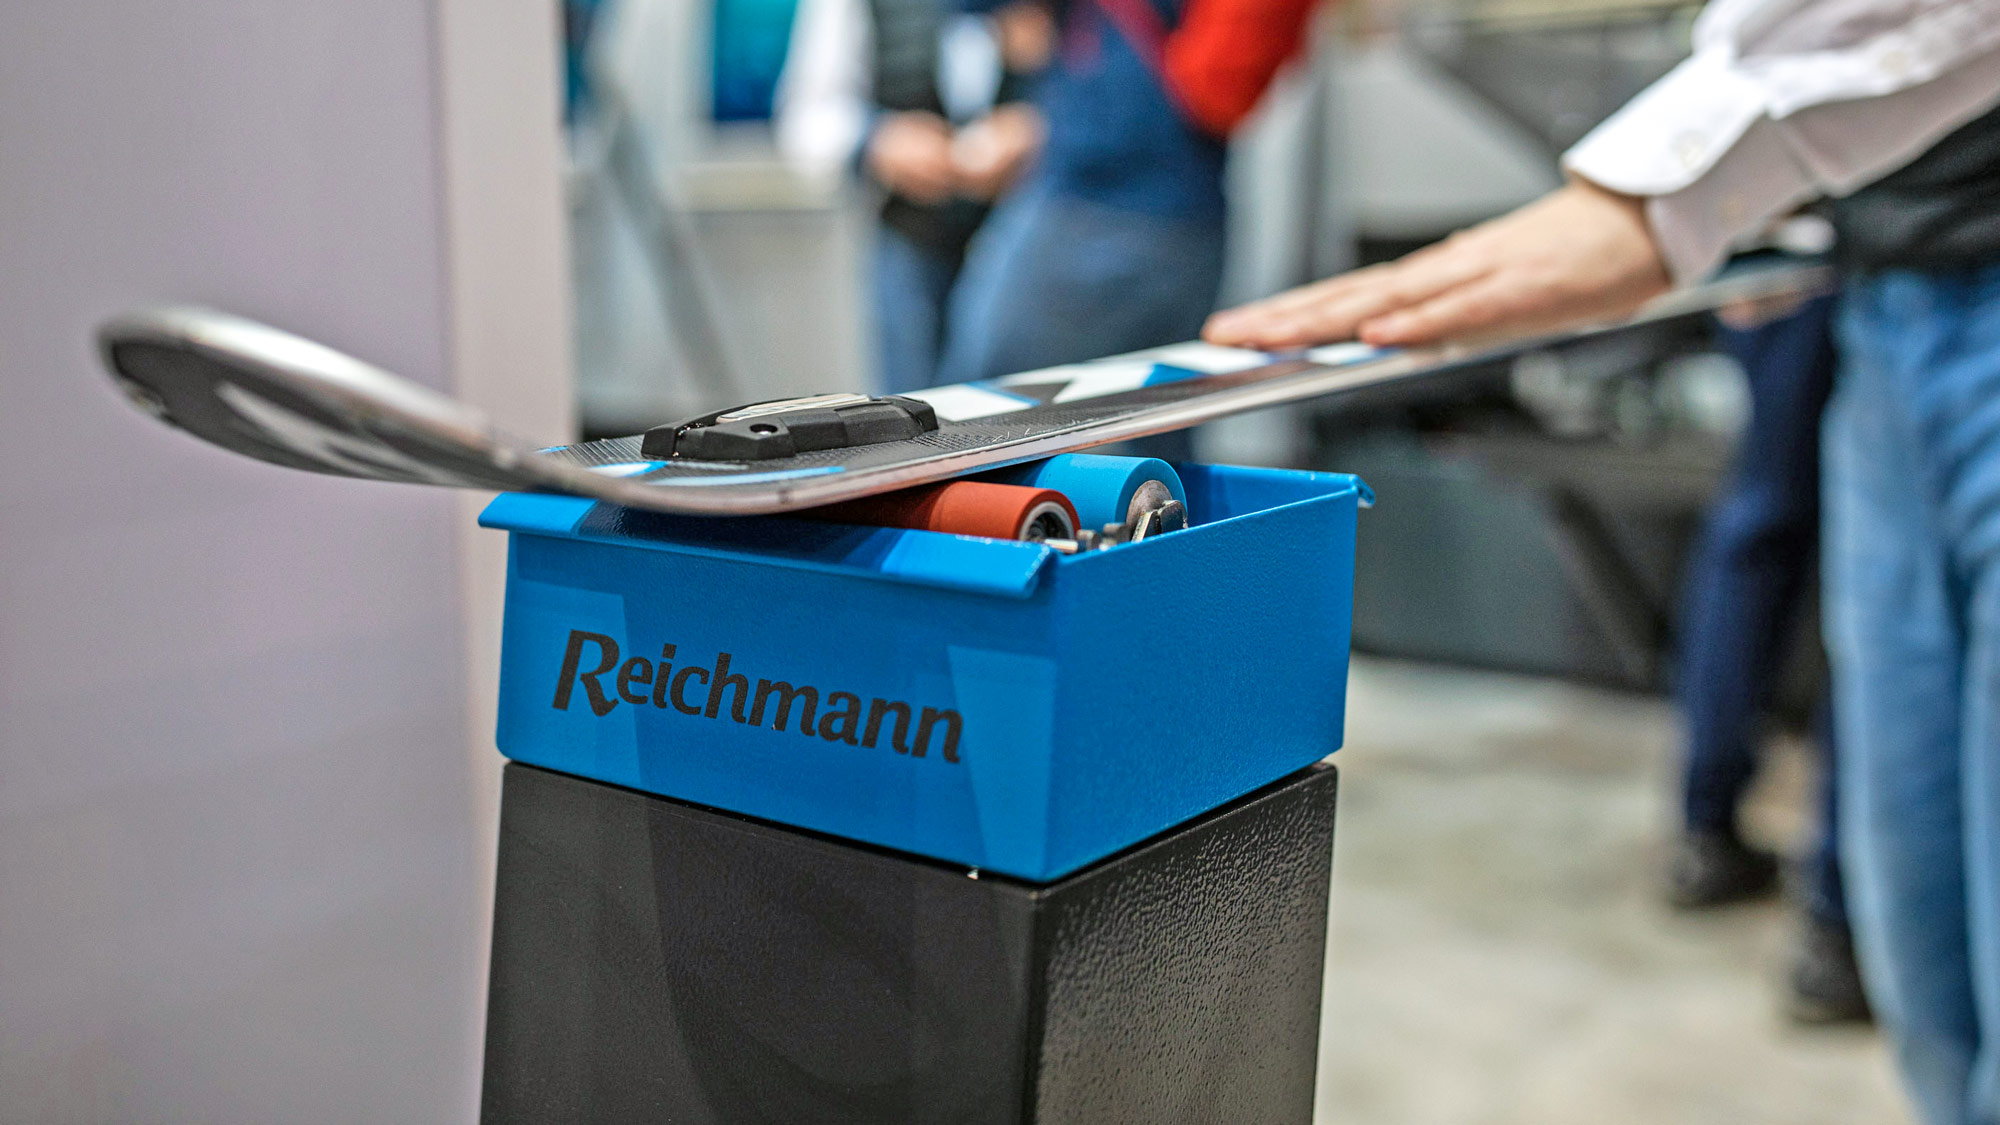 Reichmann Glide Master - application device for GigaGlide